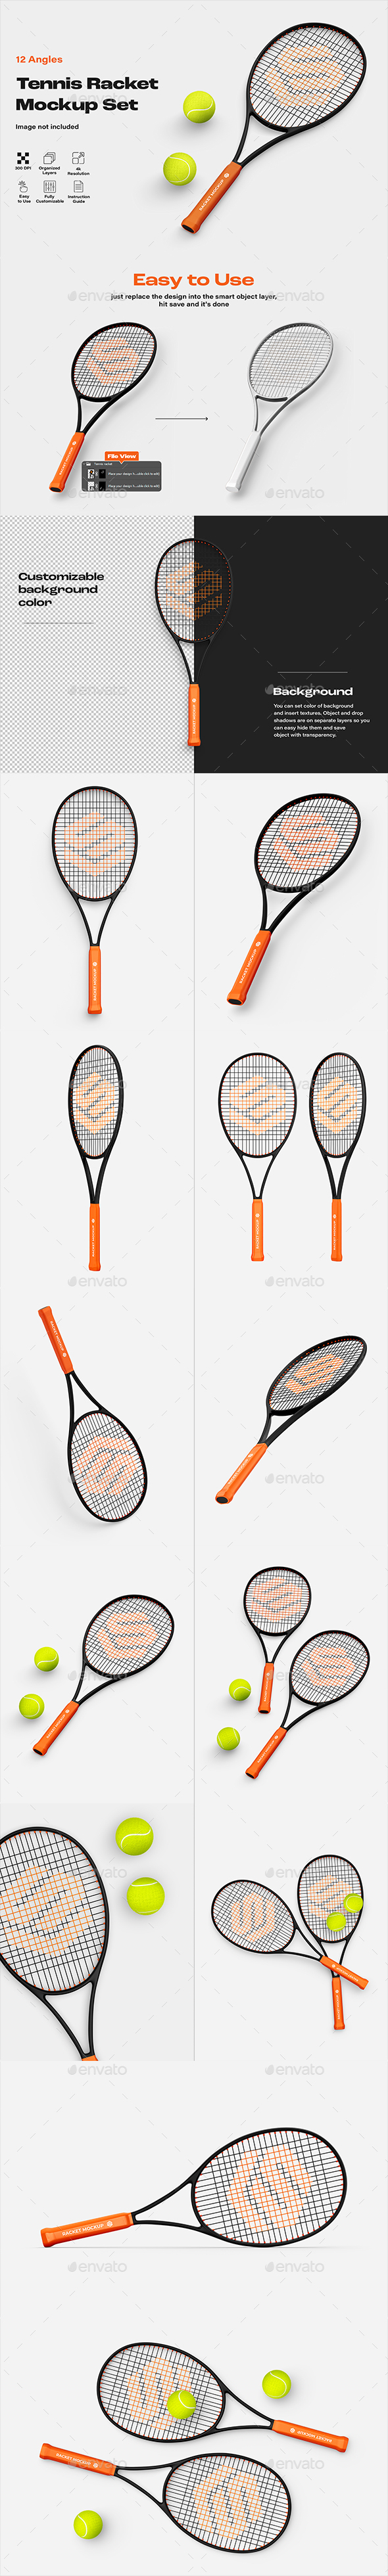 Tennis Racket Mockup Set